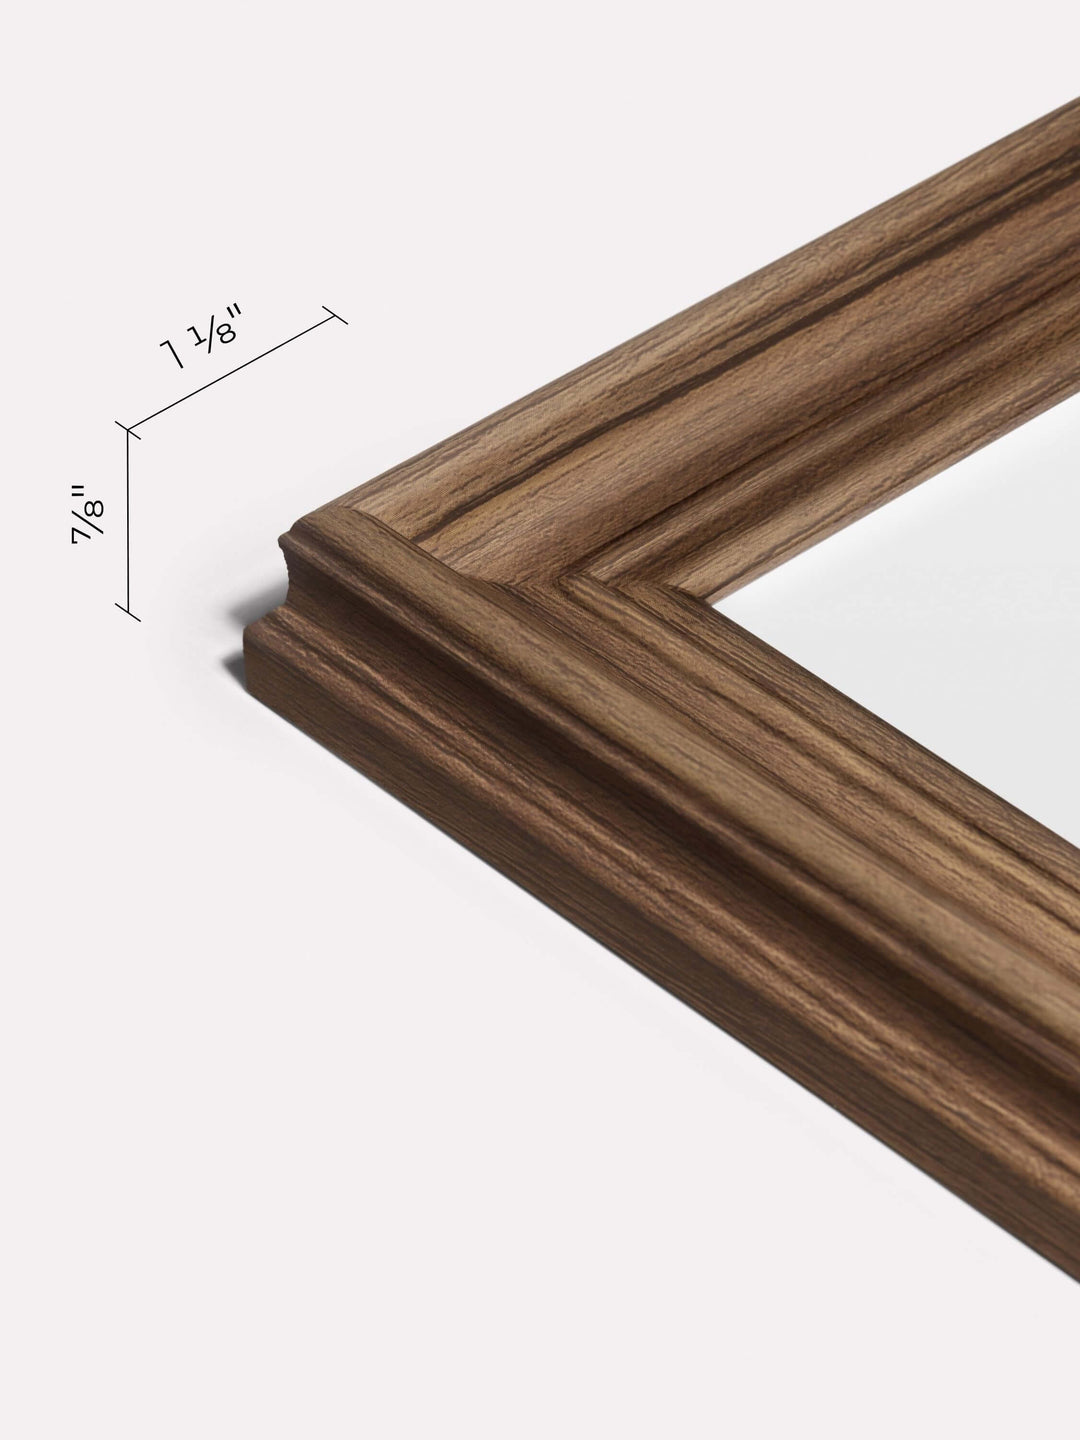 24x36-inch Decorative Frame, Walnut - Close-up view